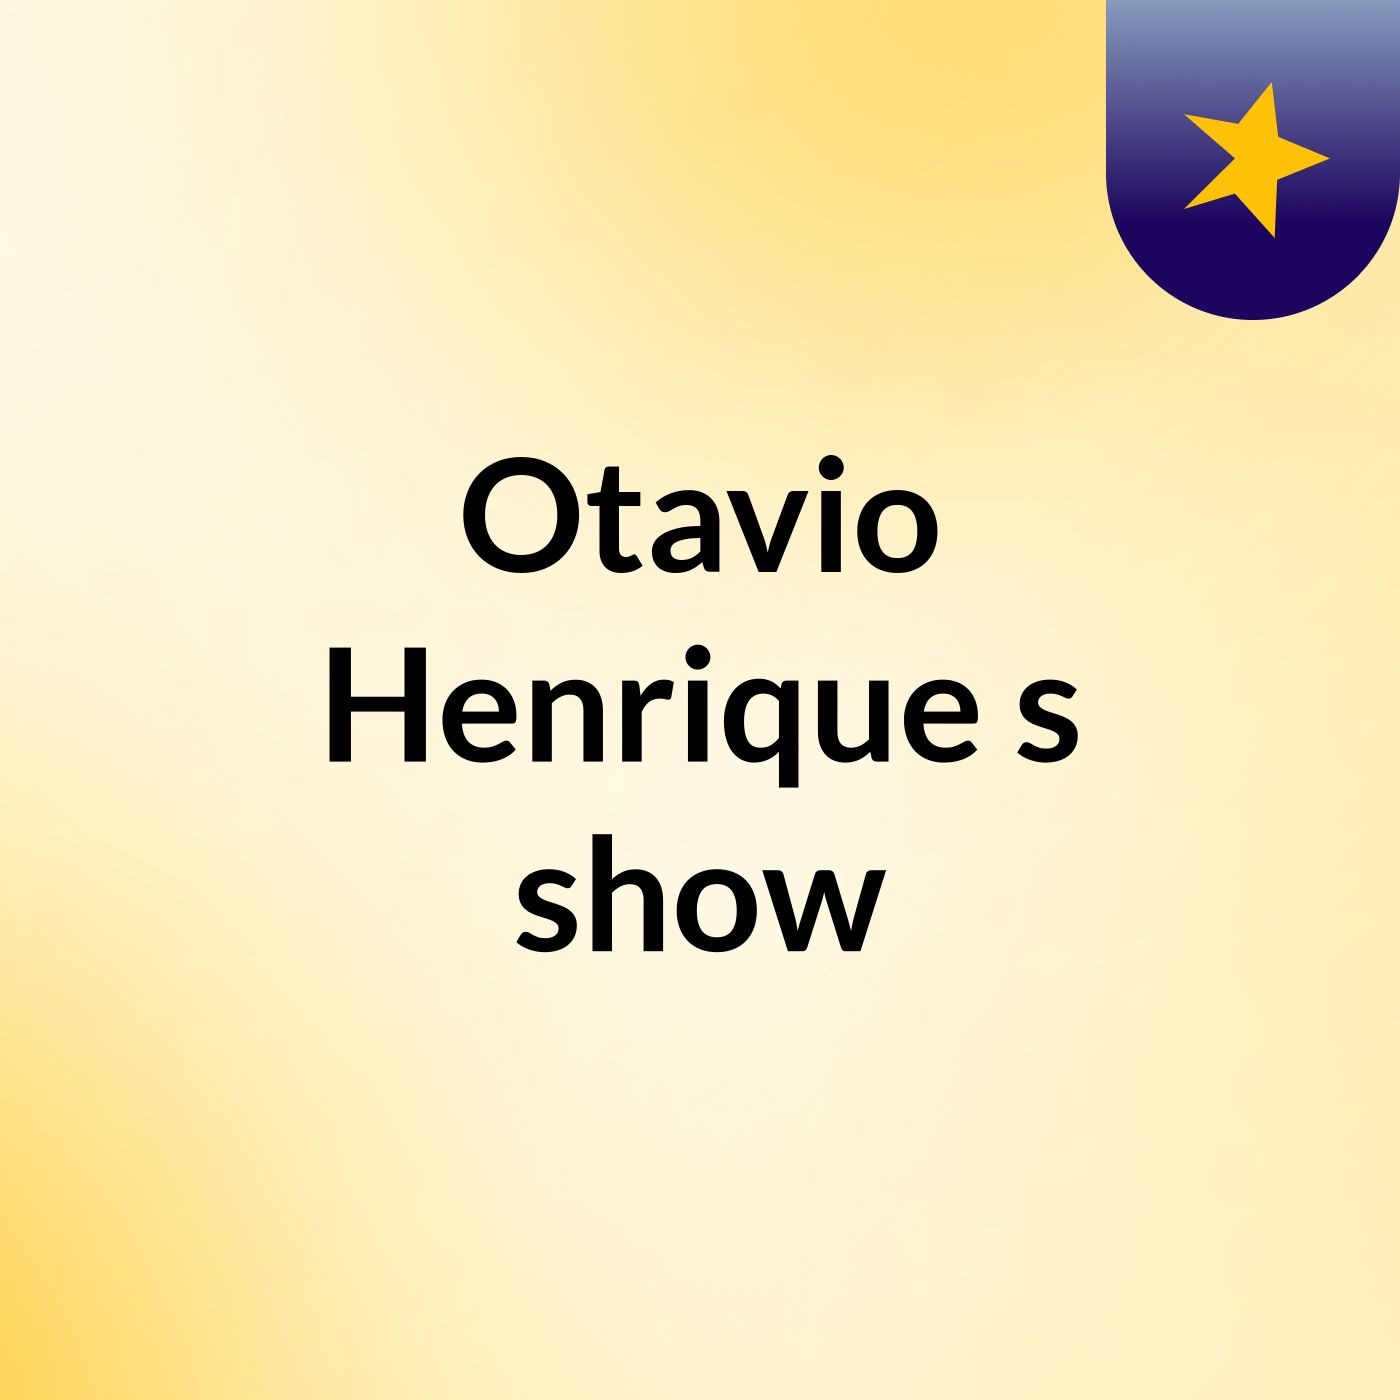 Otavio Henrique's show